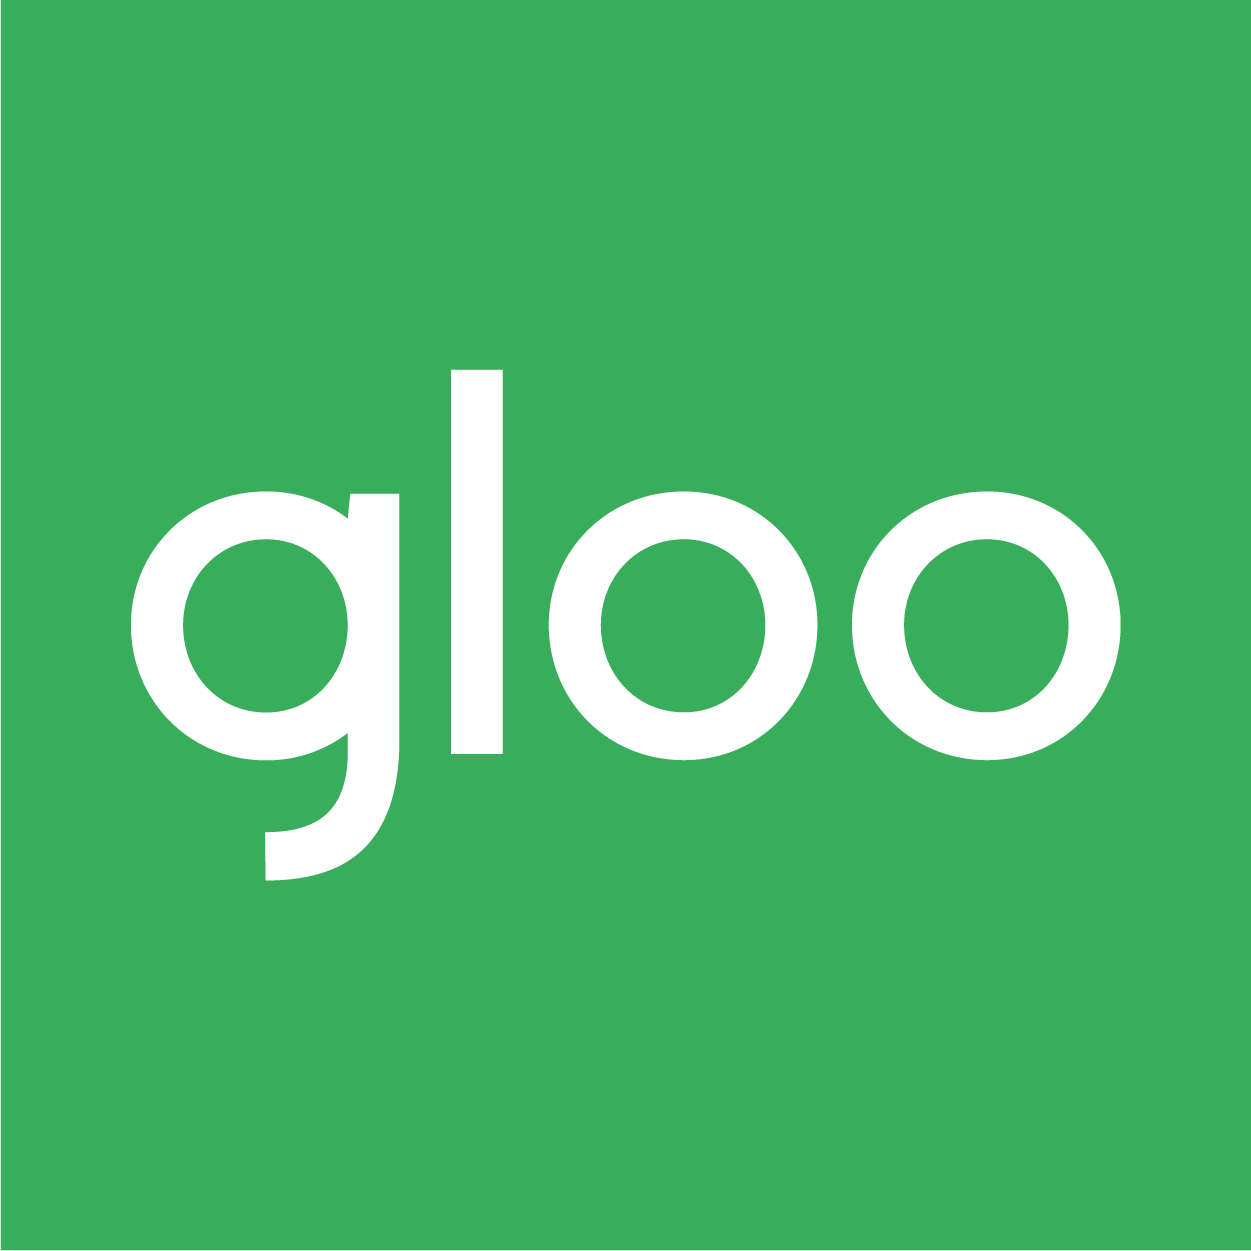 gloo-logo.png